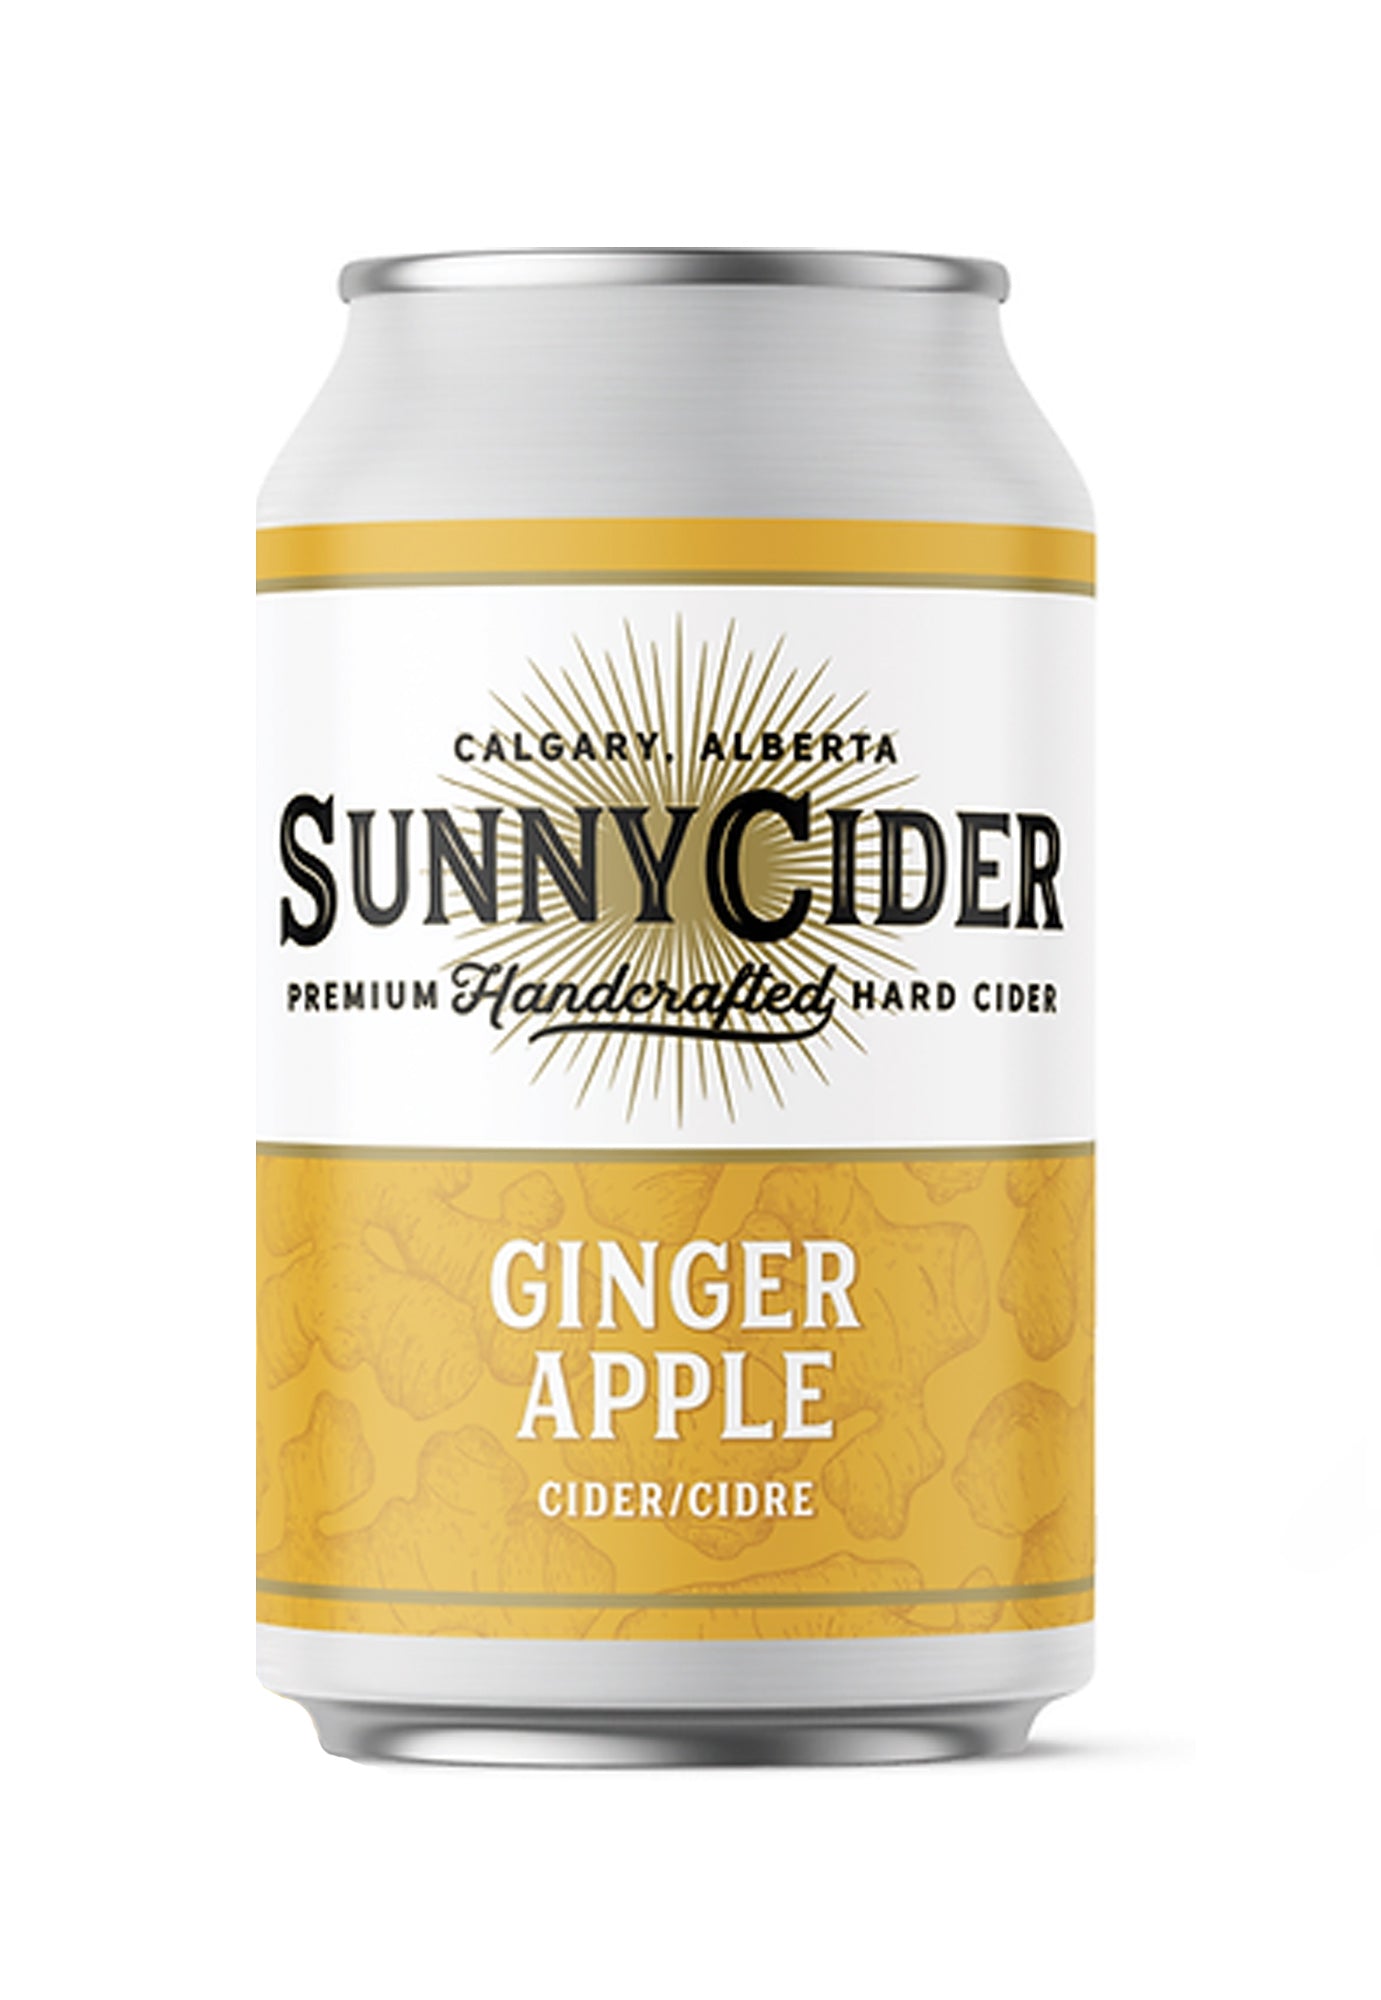 SunnyCider Ginger Apple Cider 355 ml - 4 Cans